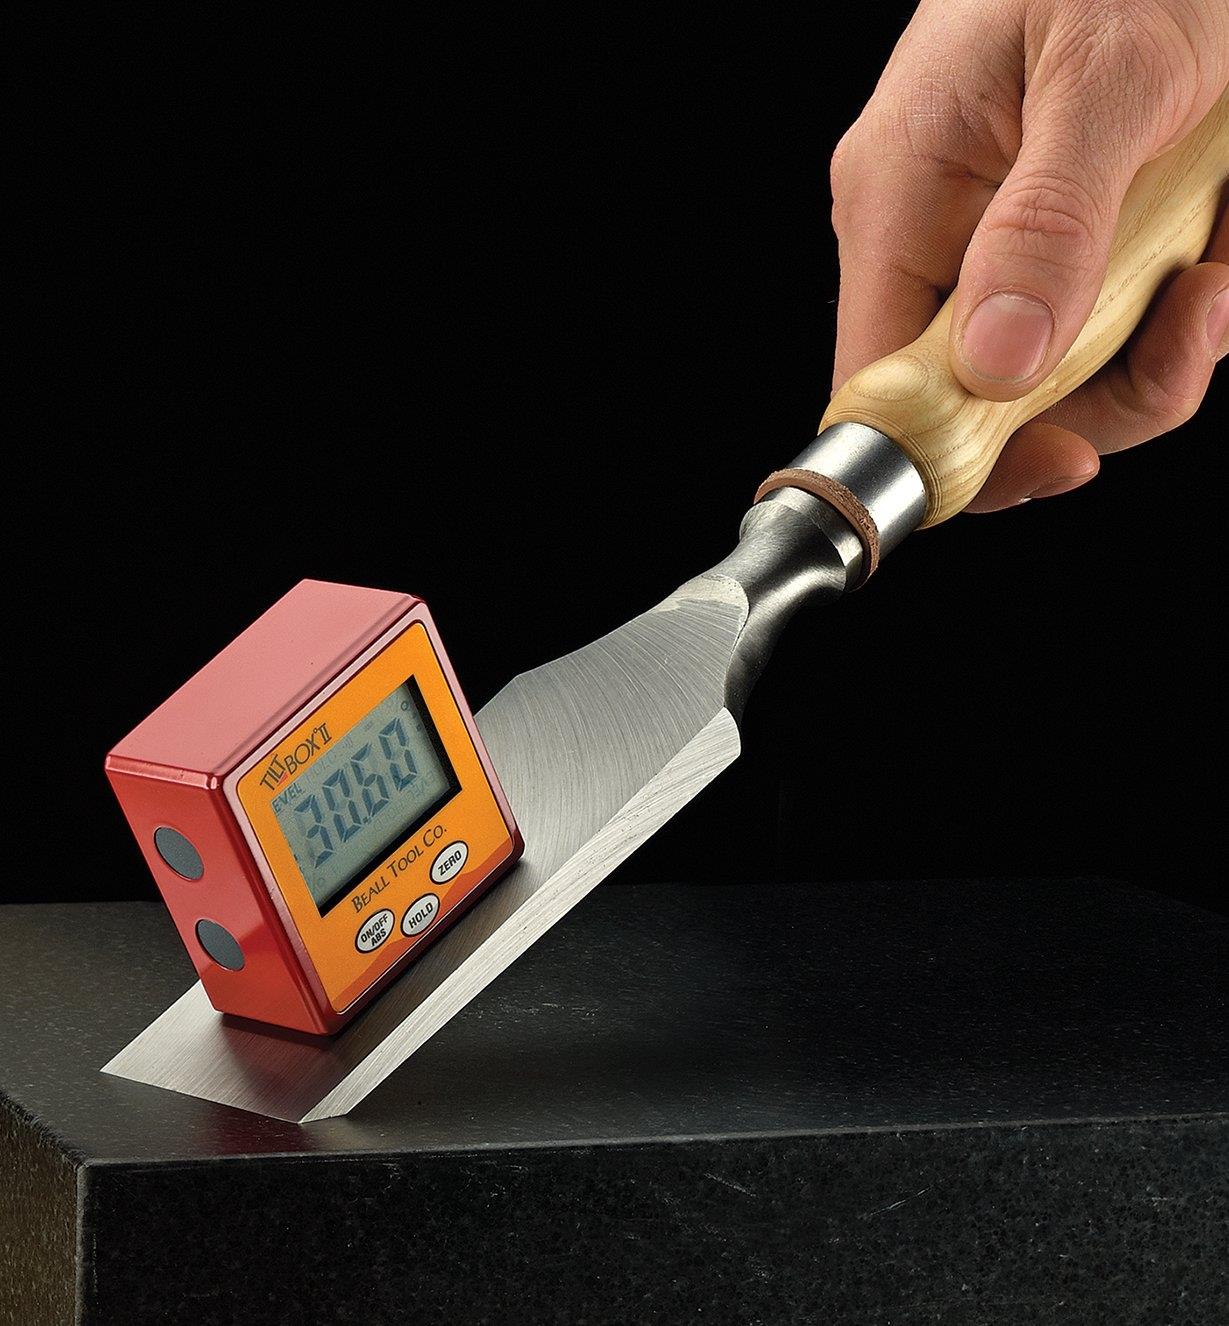 Tilt Box II Digital Inclinometer secured to a chisel blade